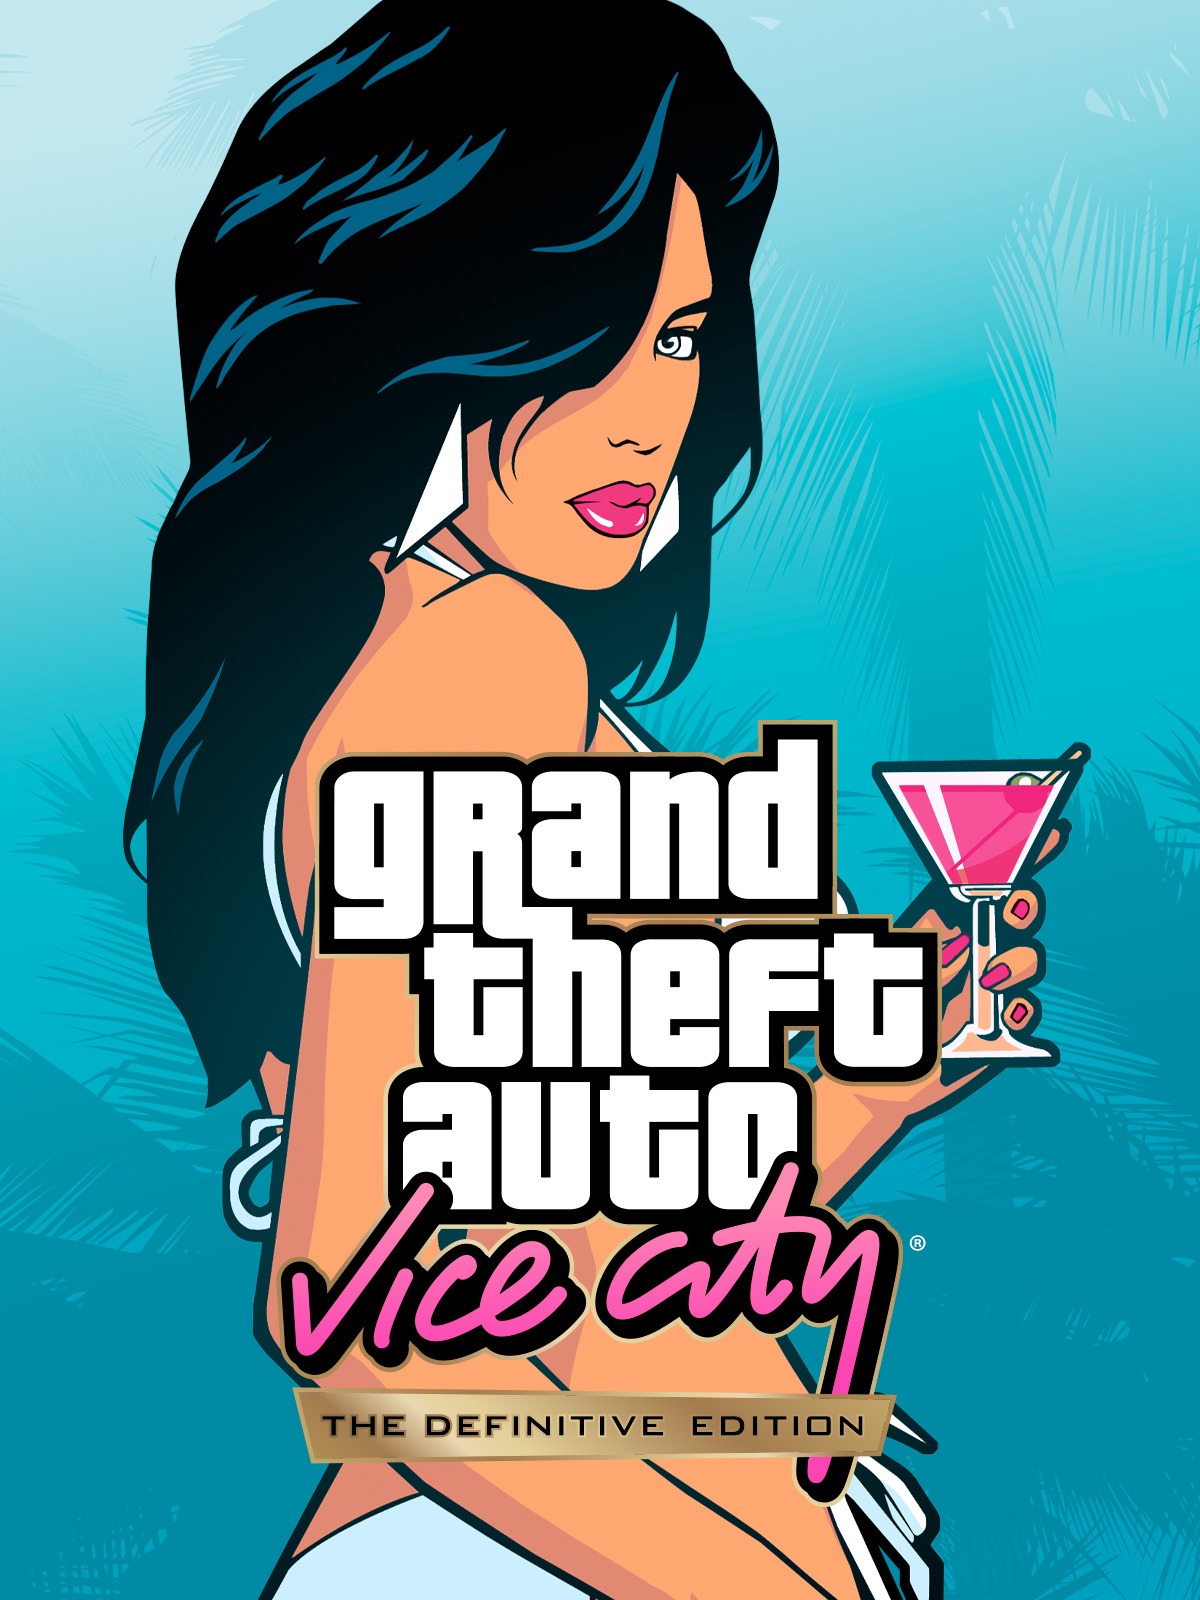 Grand Theft Auto - Vice City.jpg